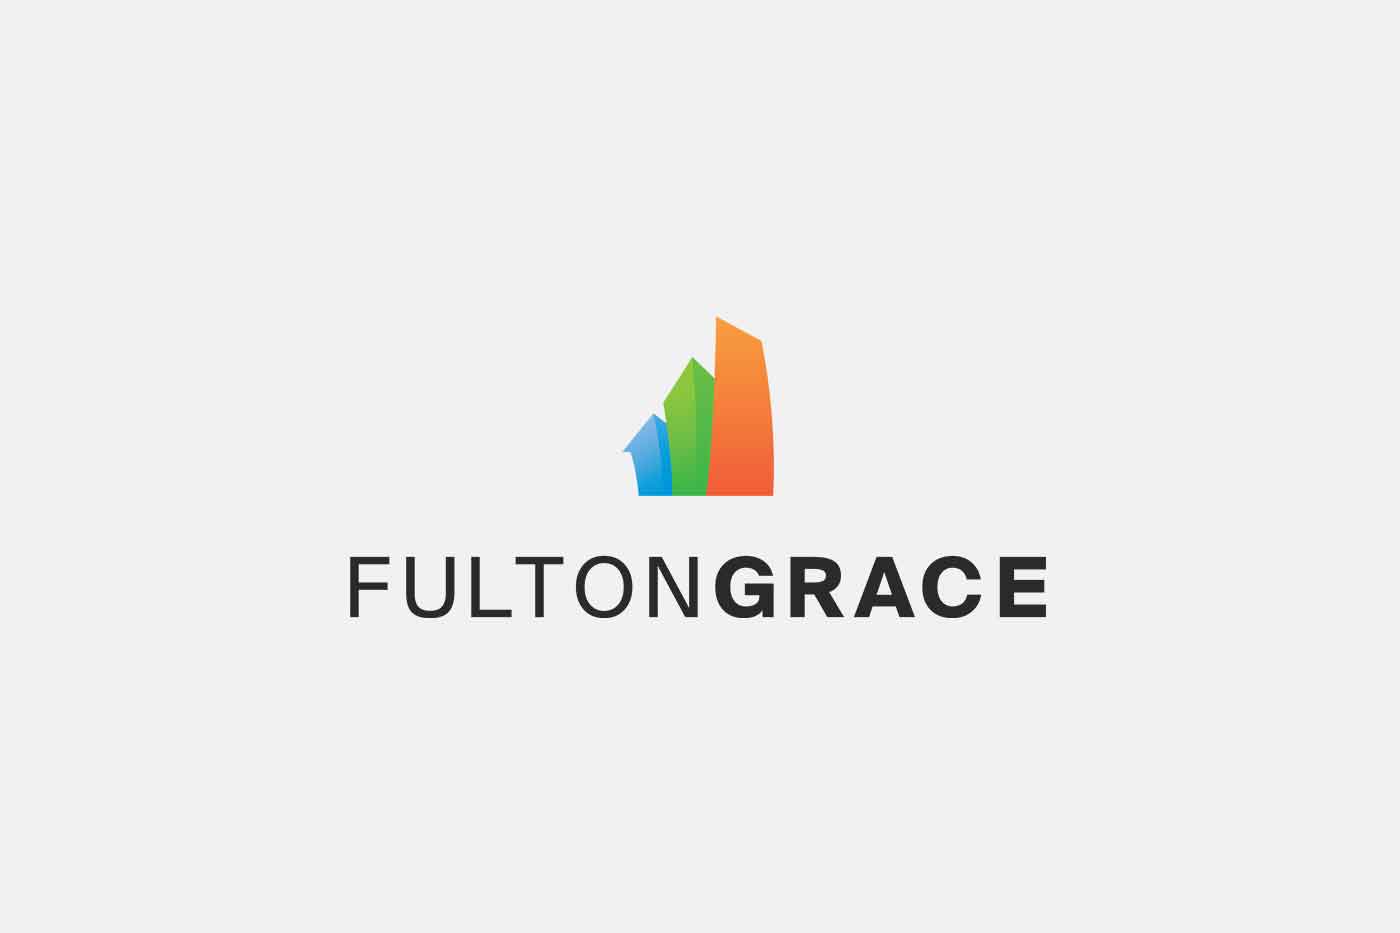 Fulton Grace